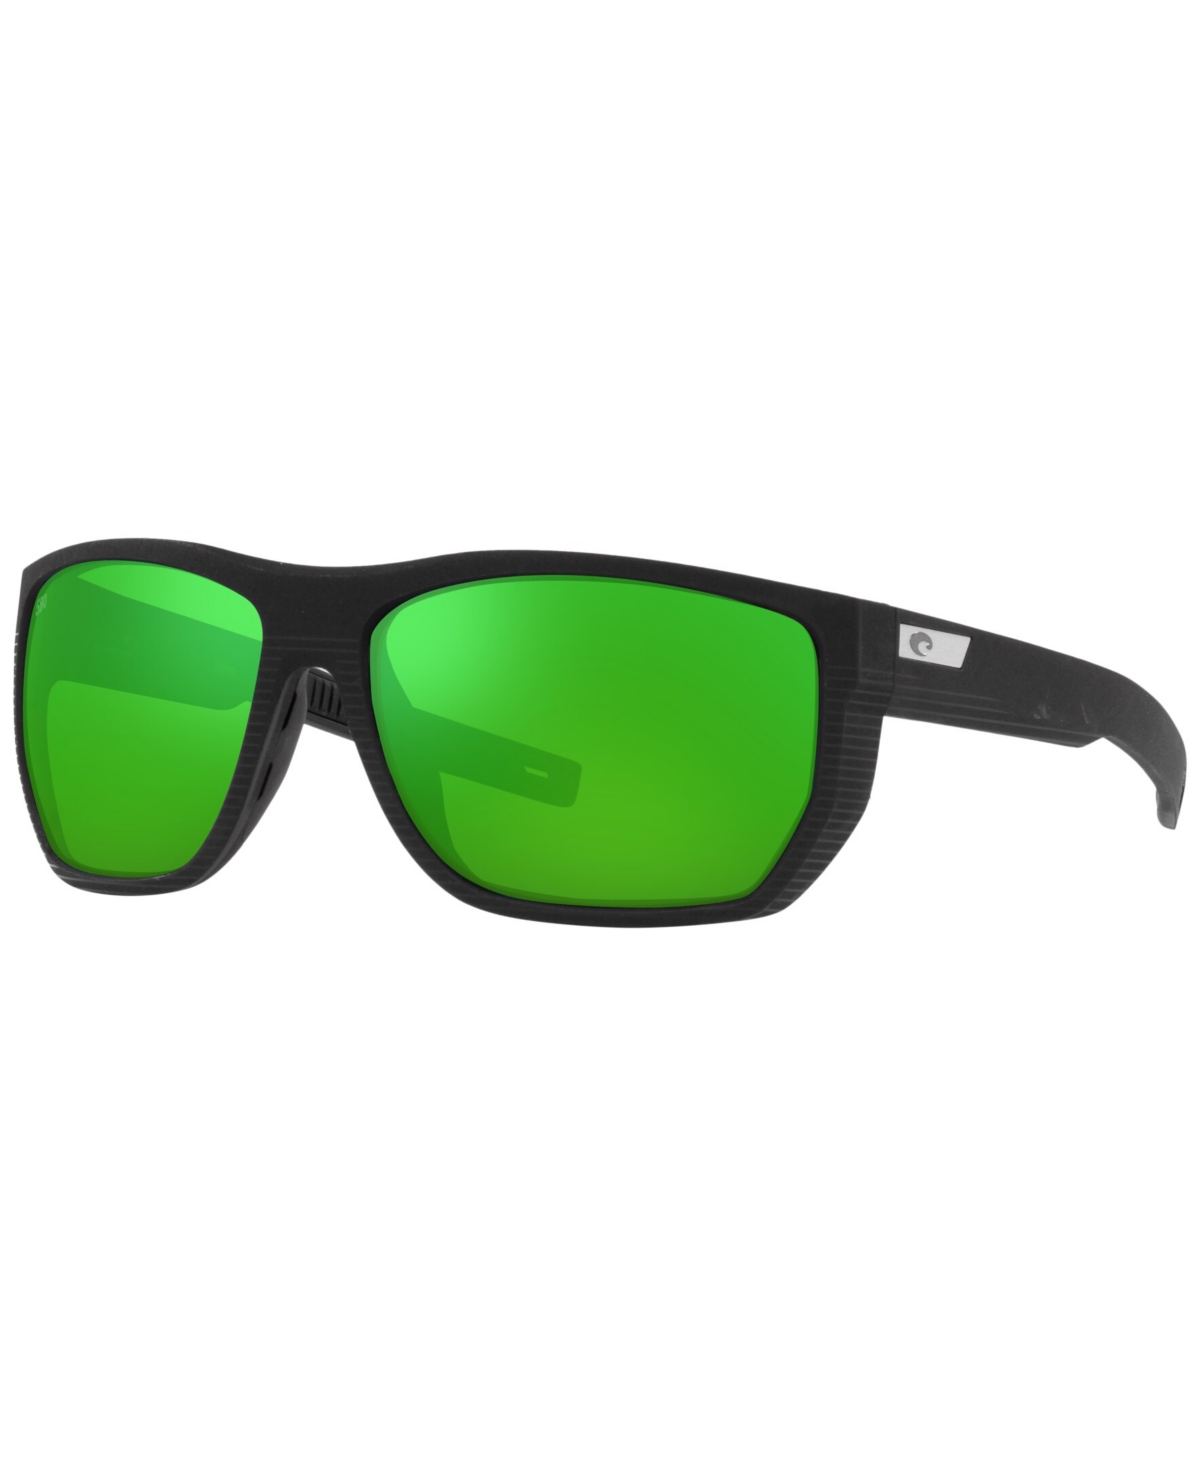 Men's Polarized Sunglasses, 06S9085 Santiago 63 - Black